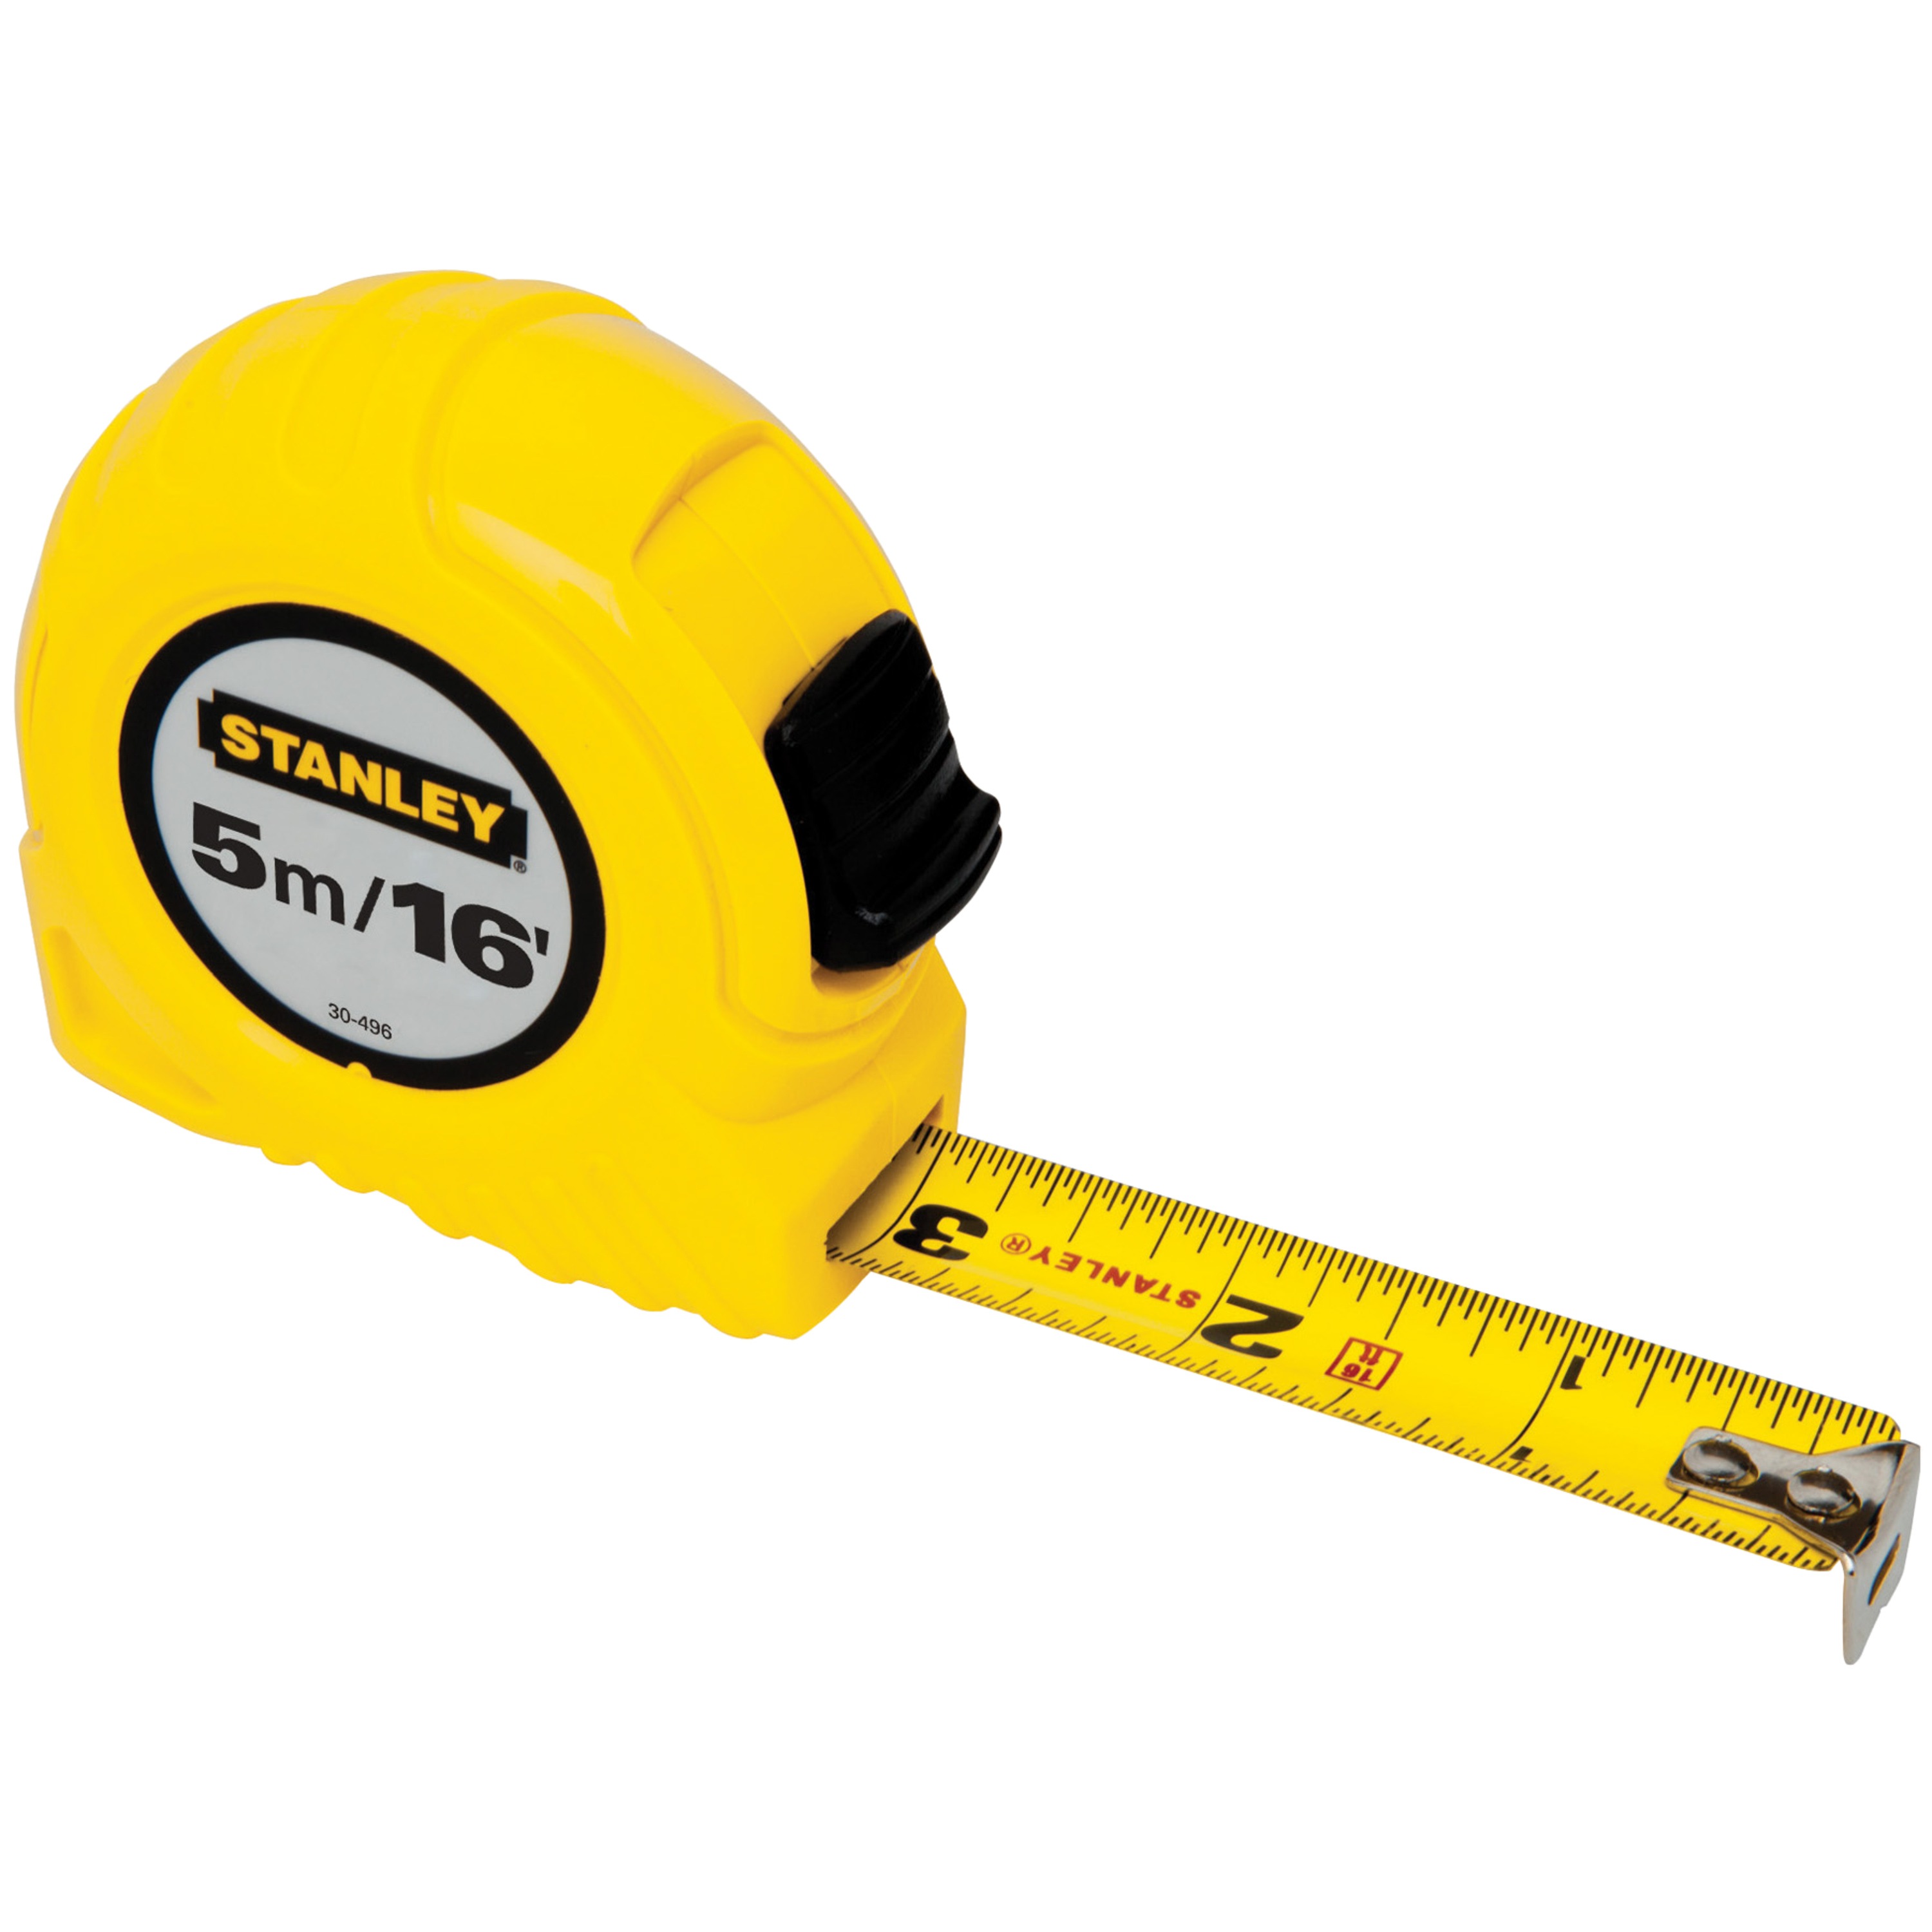 Stanley Tools - 5m16 ft Tape Measure - 30-496